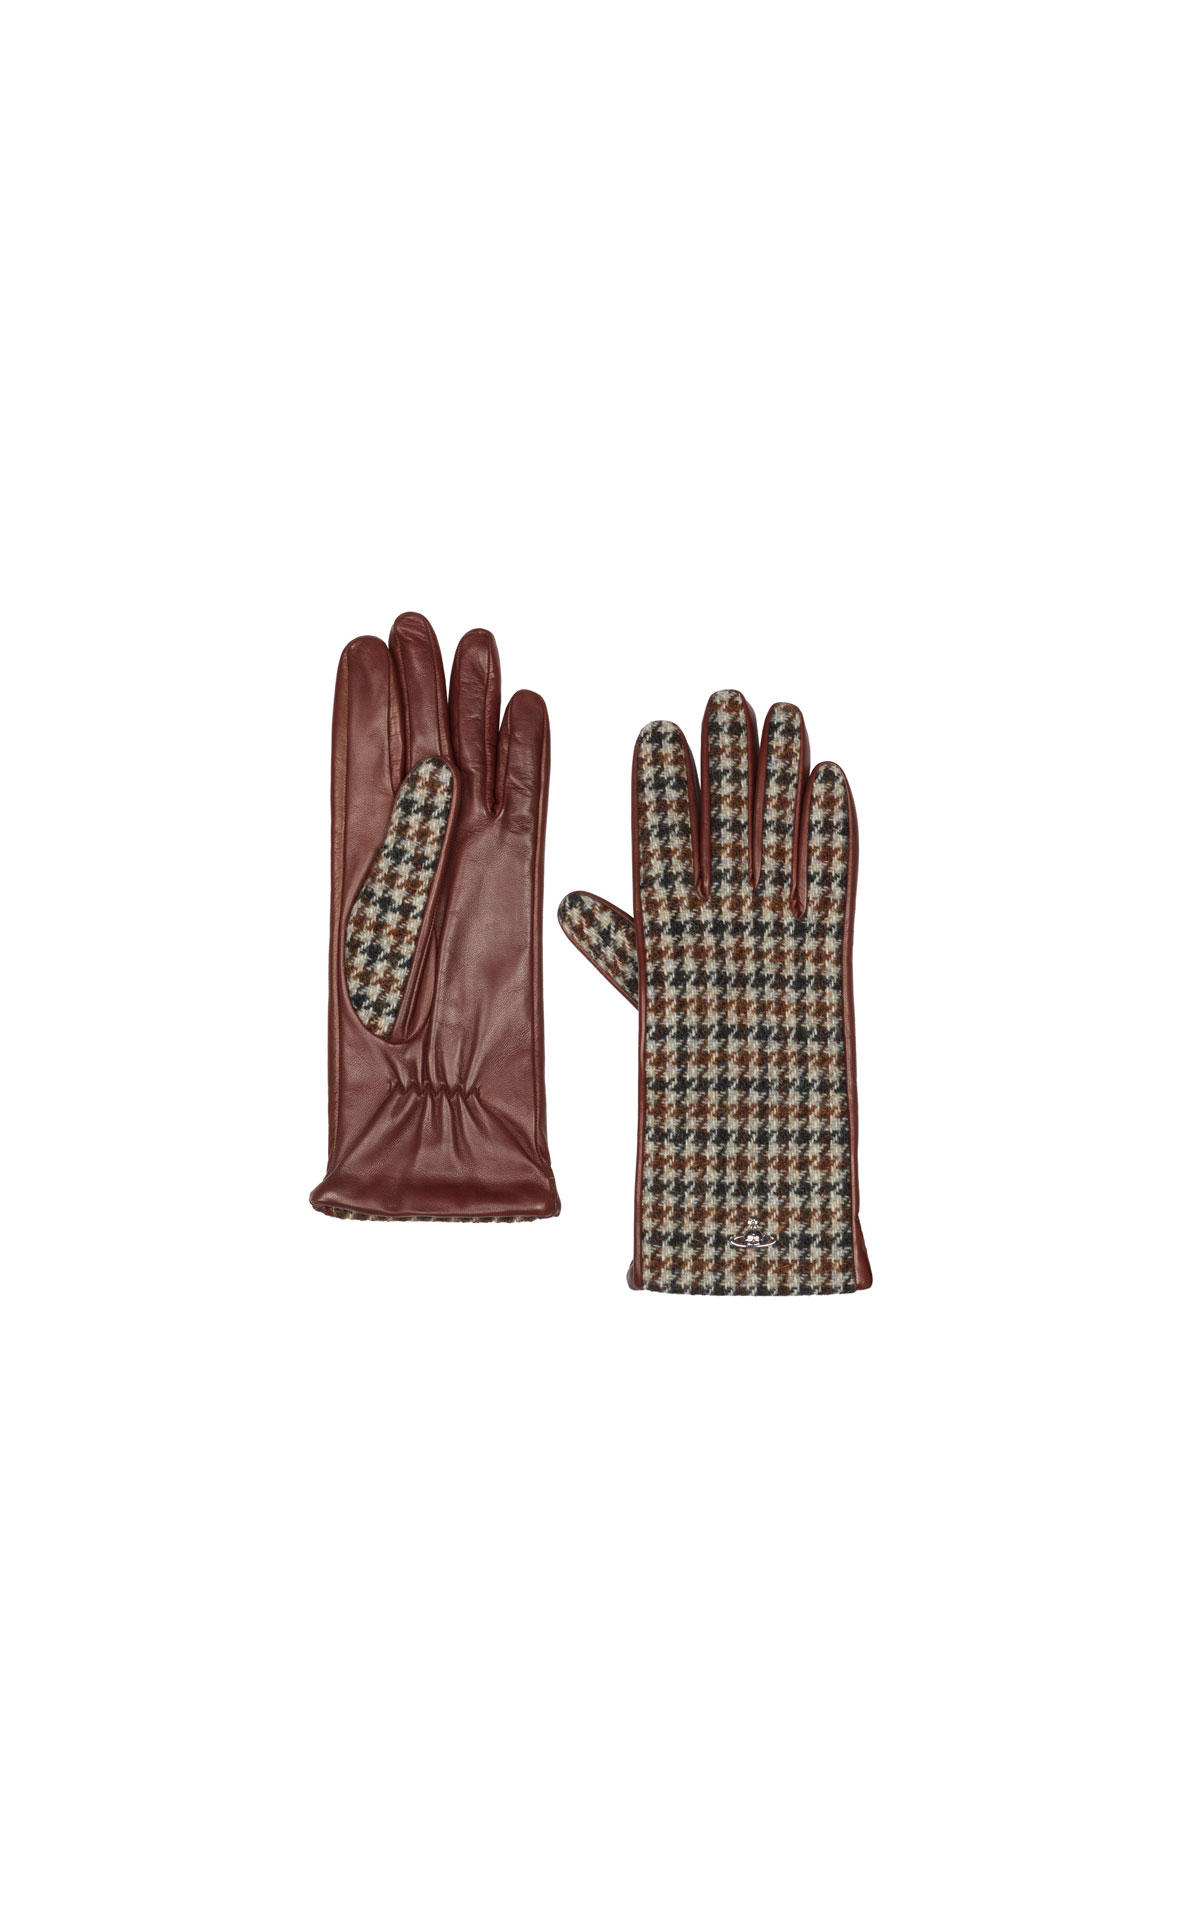 Vivienne Westwood Leather gloves from Bicester Village